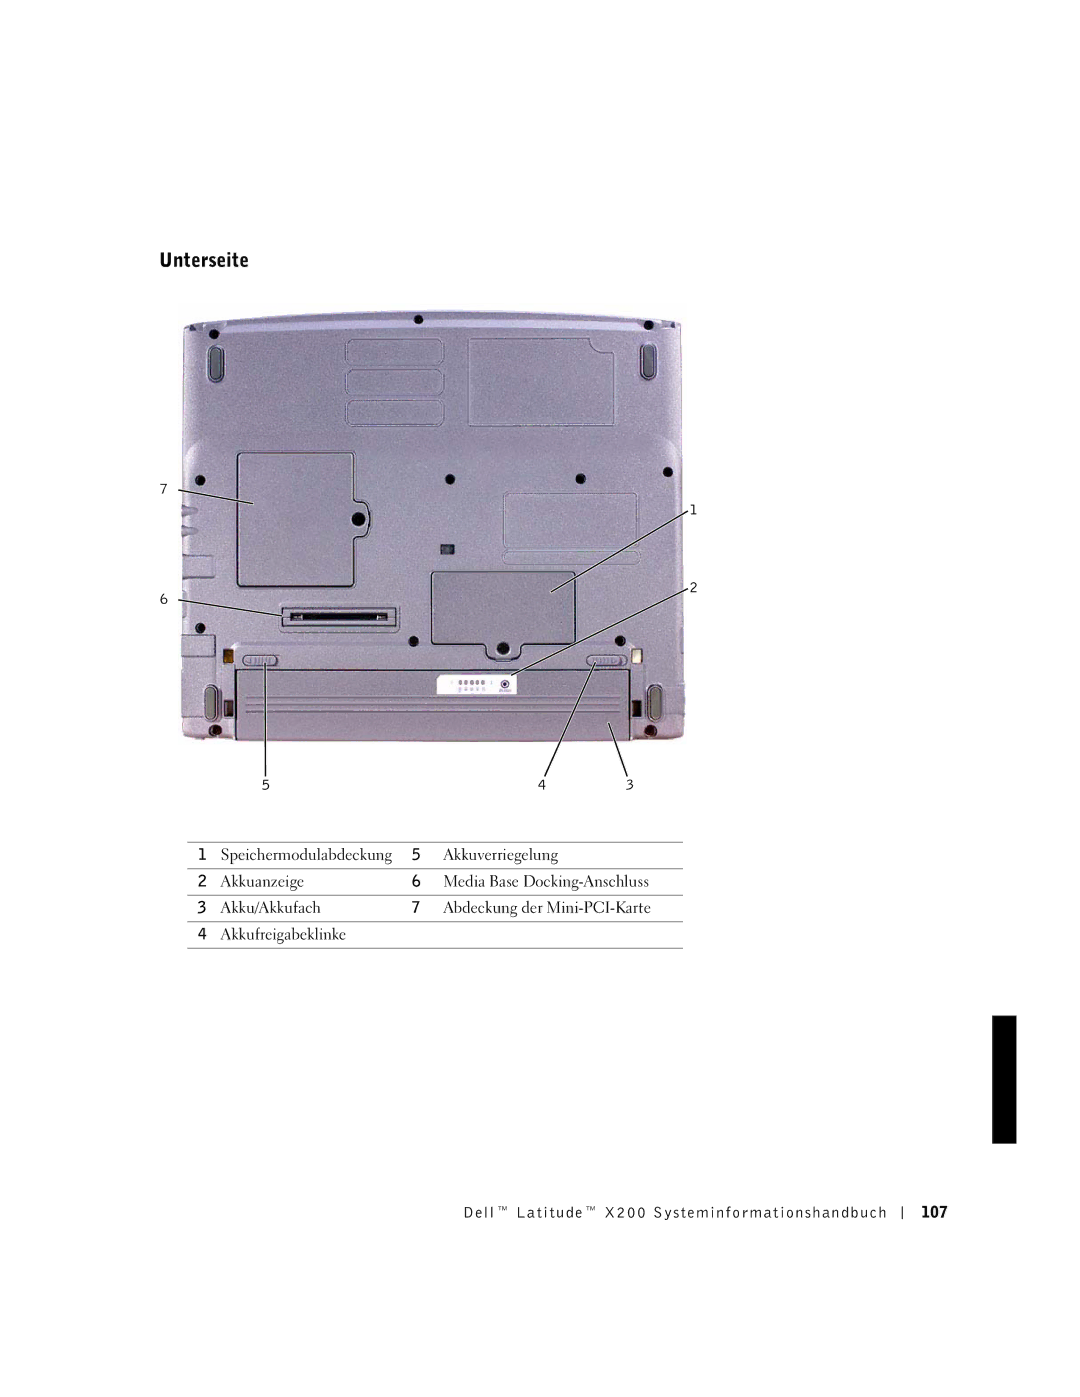 LeapFrog PP03S manual Unterseite, Dell Latitude X200 Systeminformationshandbuch 107 